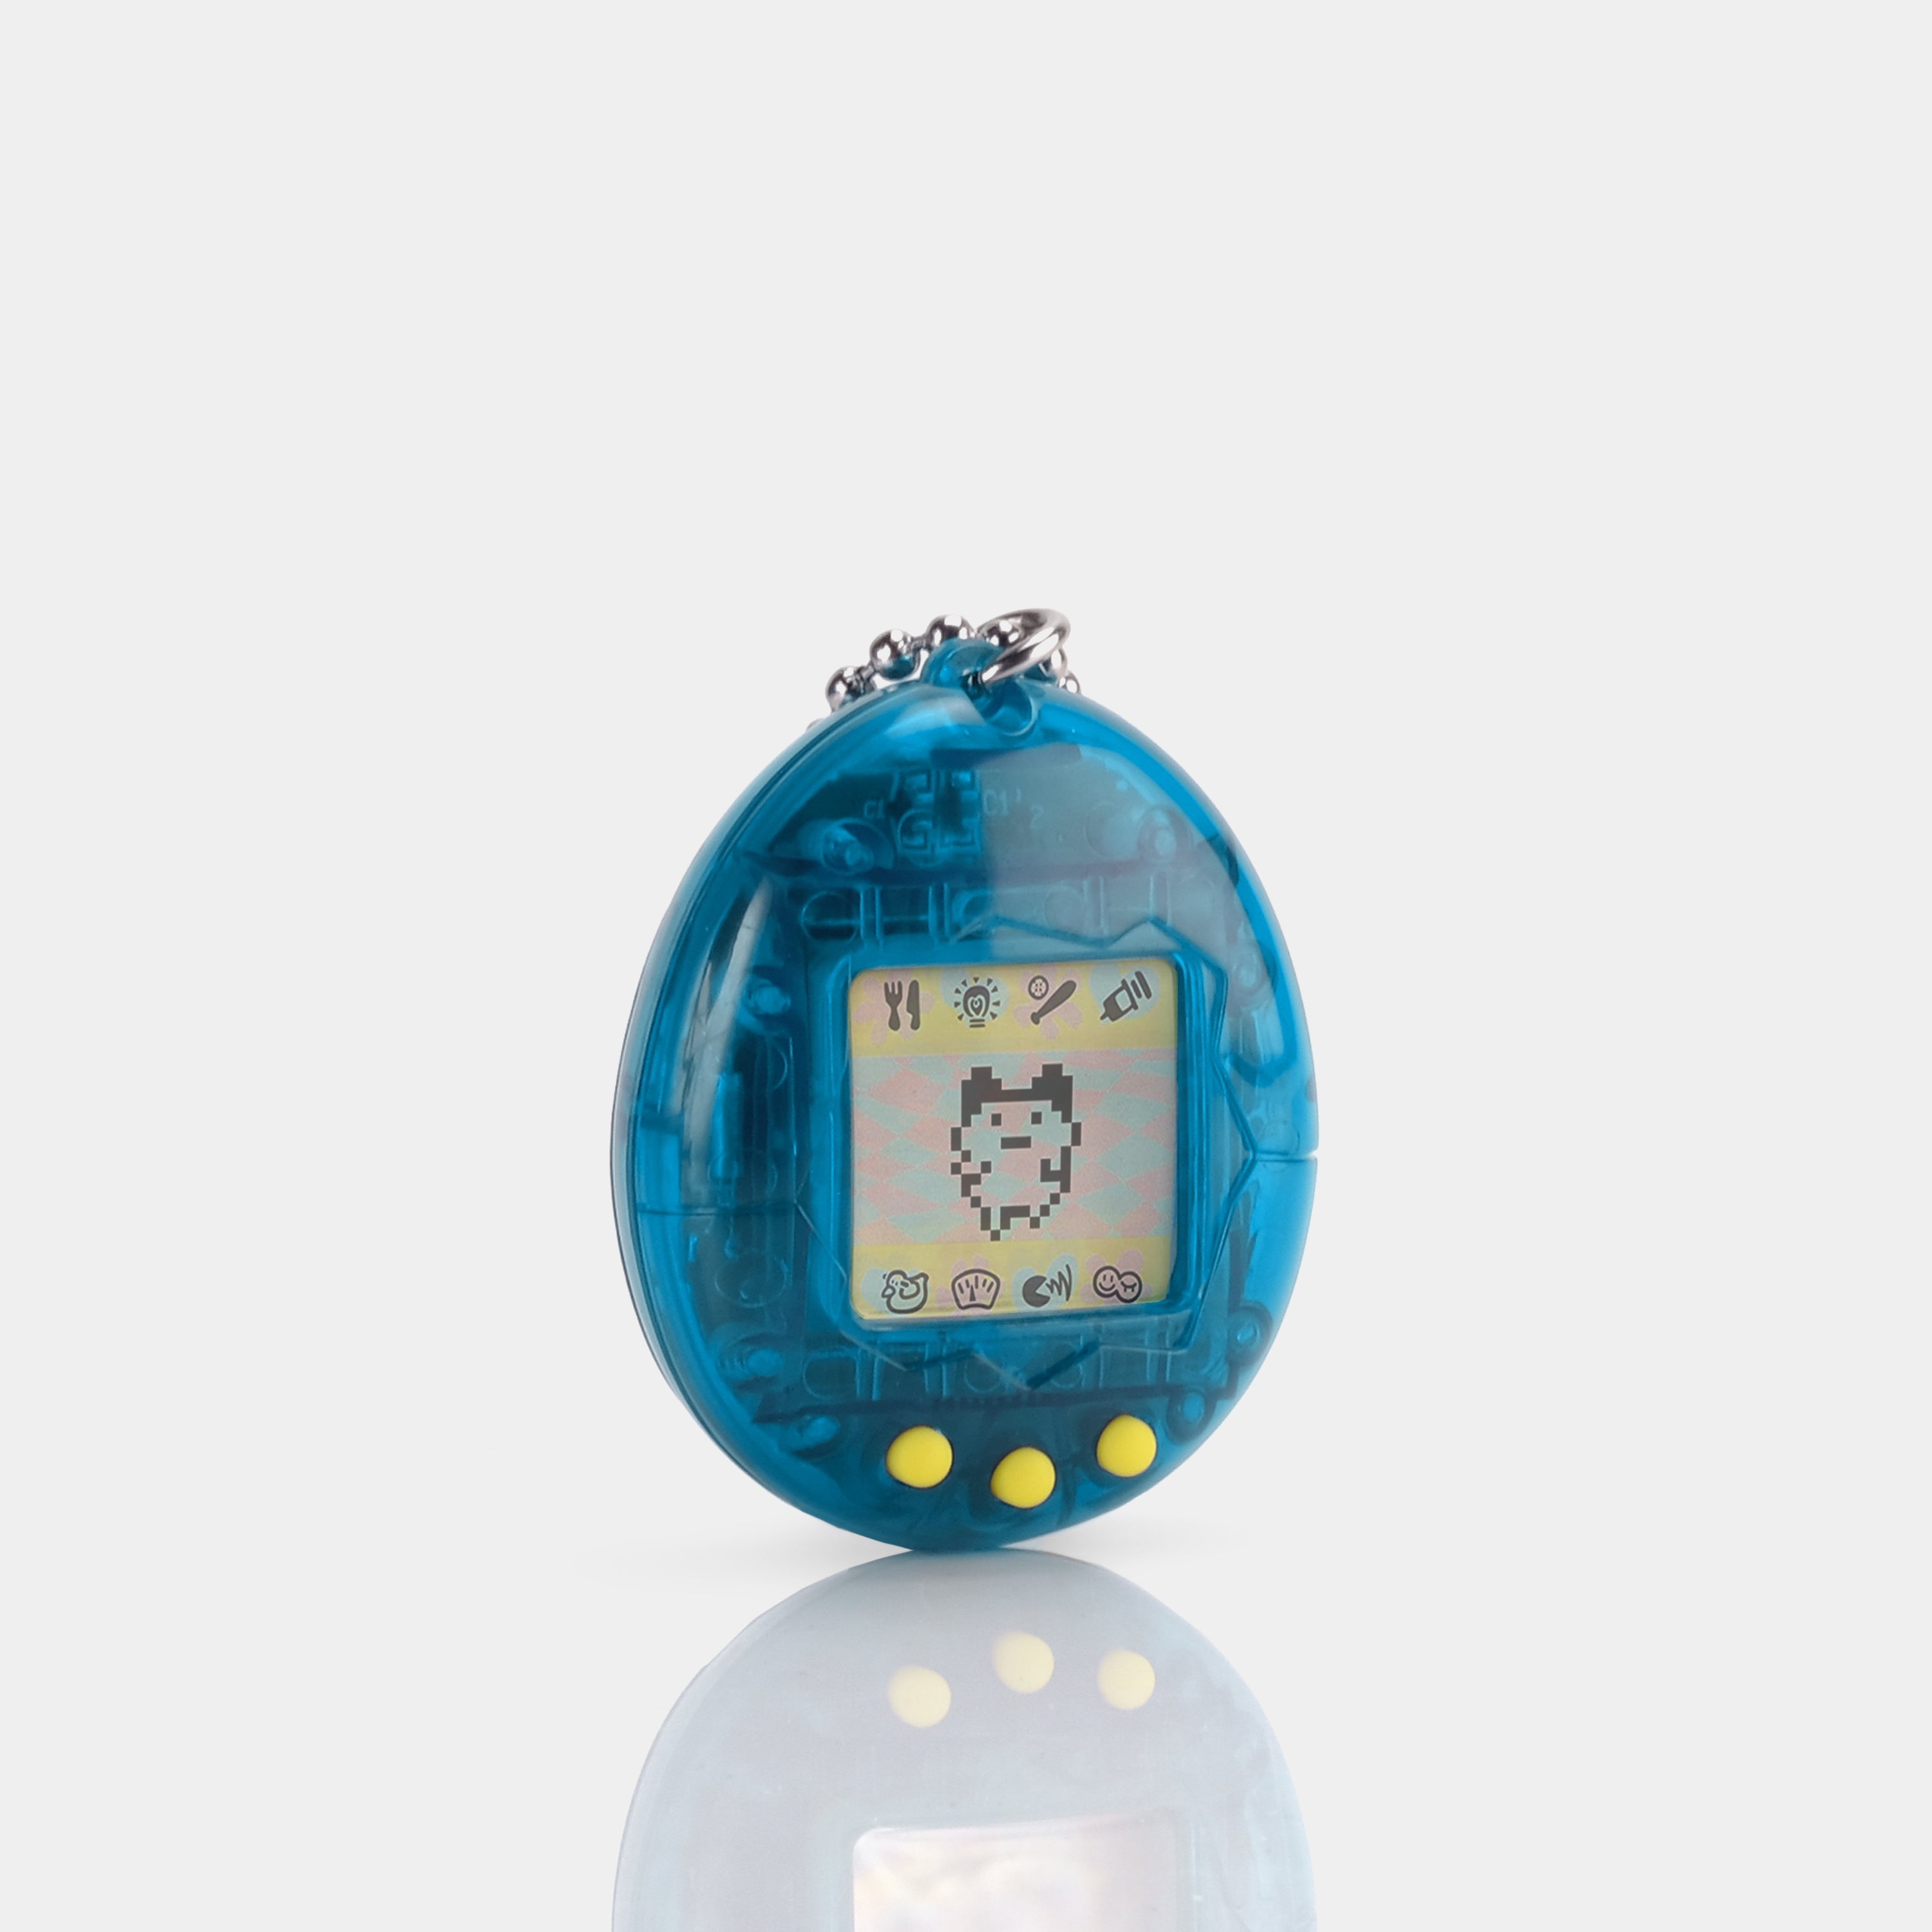 Original Tamagotchi Translucent Blue Virtual Pet